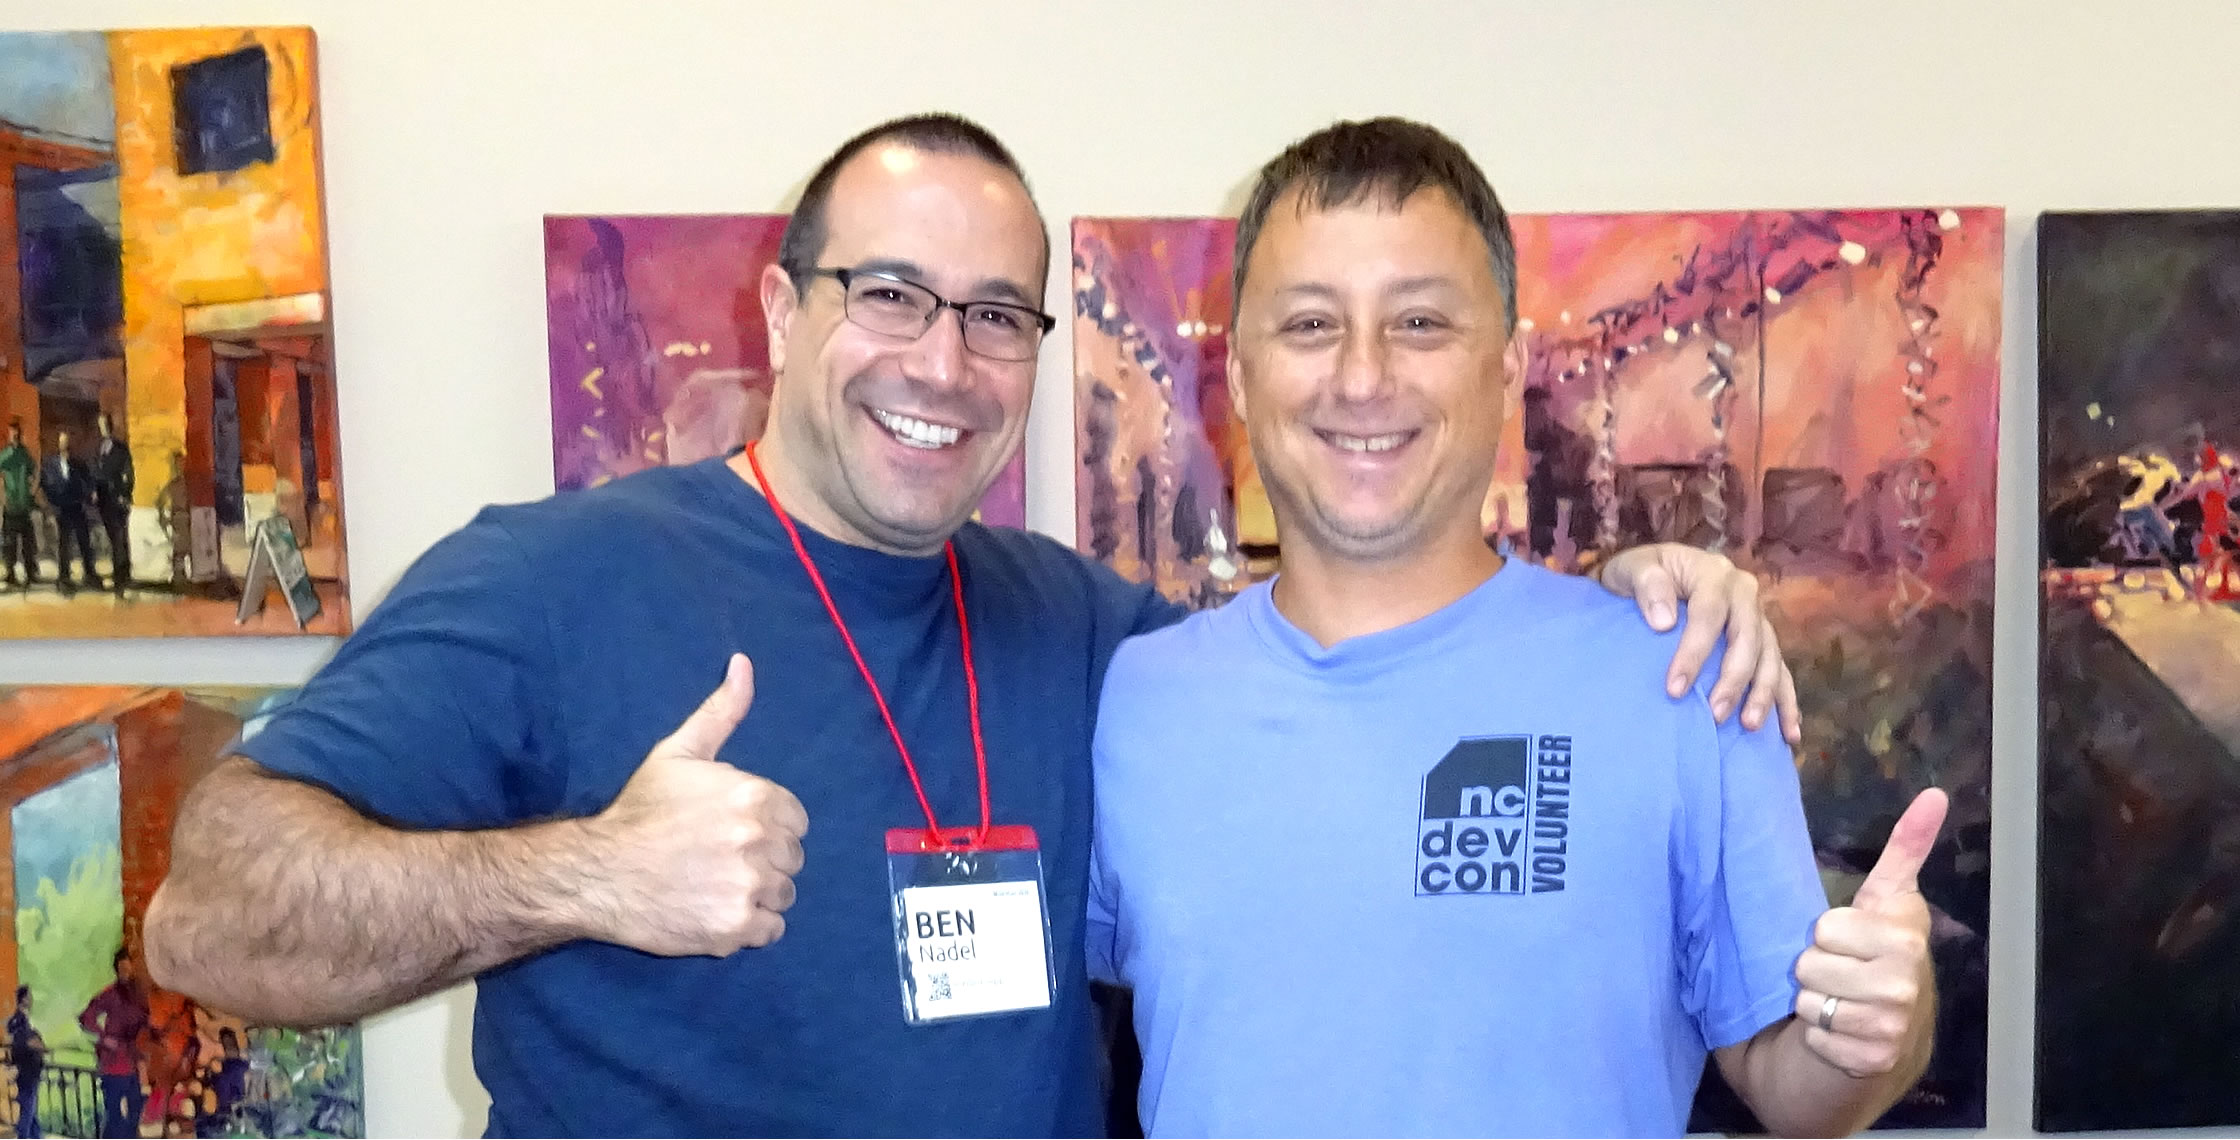 Ben Nadel at NCDevCon 2016 (Raleigh, NC) with: Dan Wilson